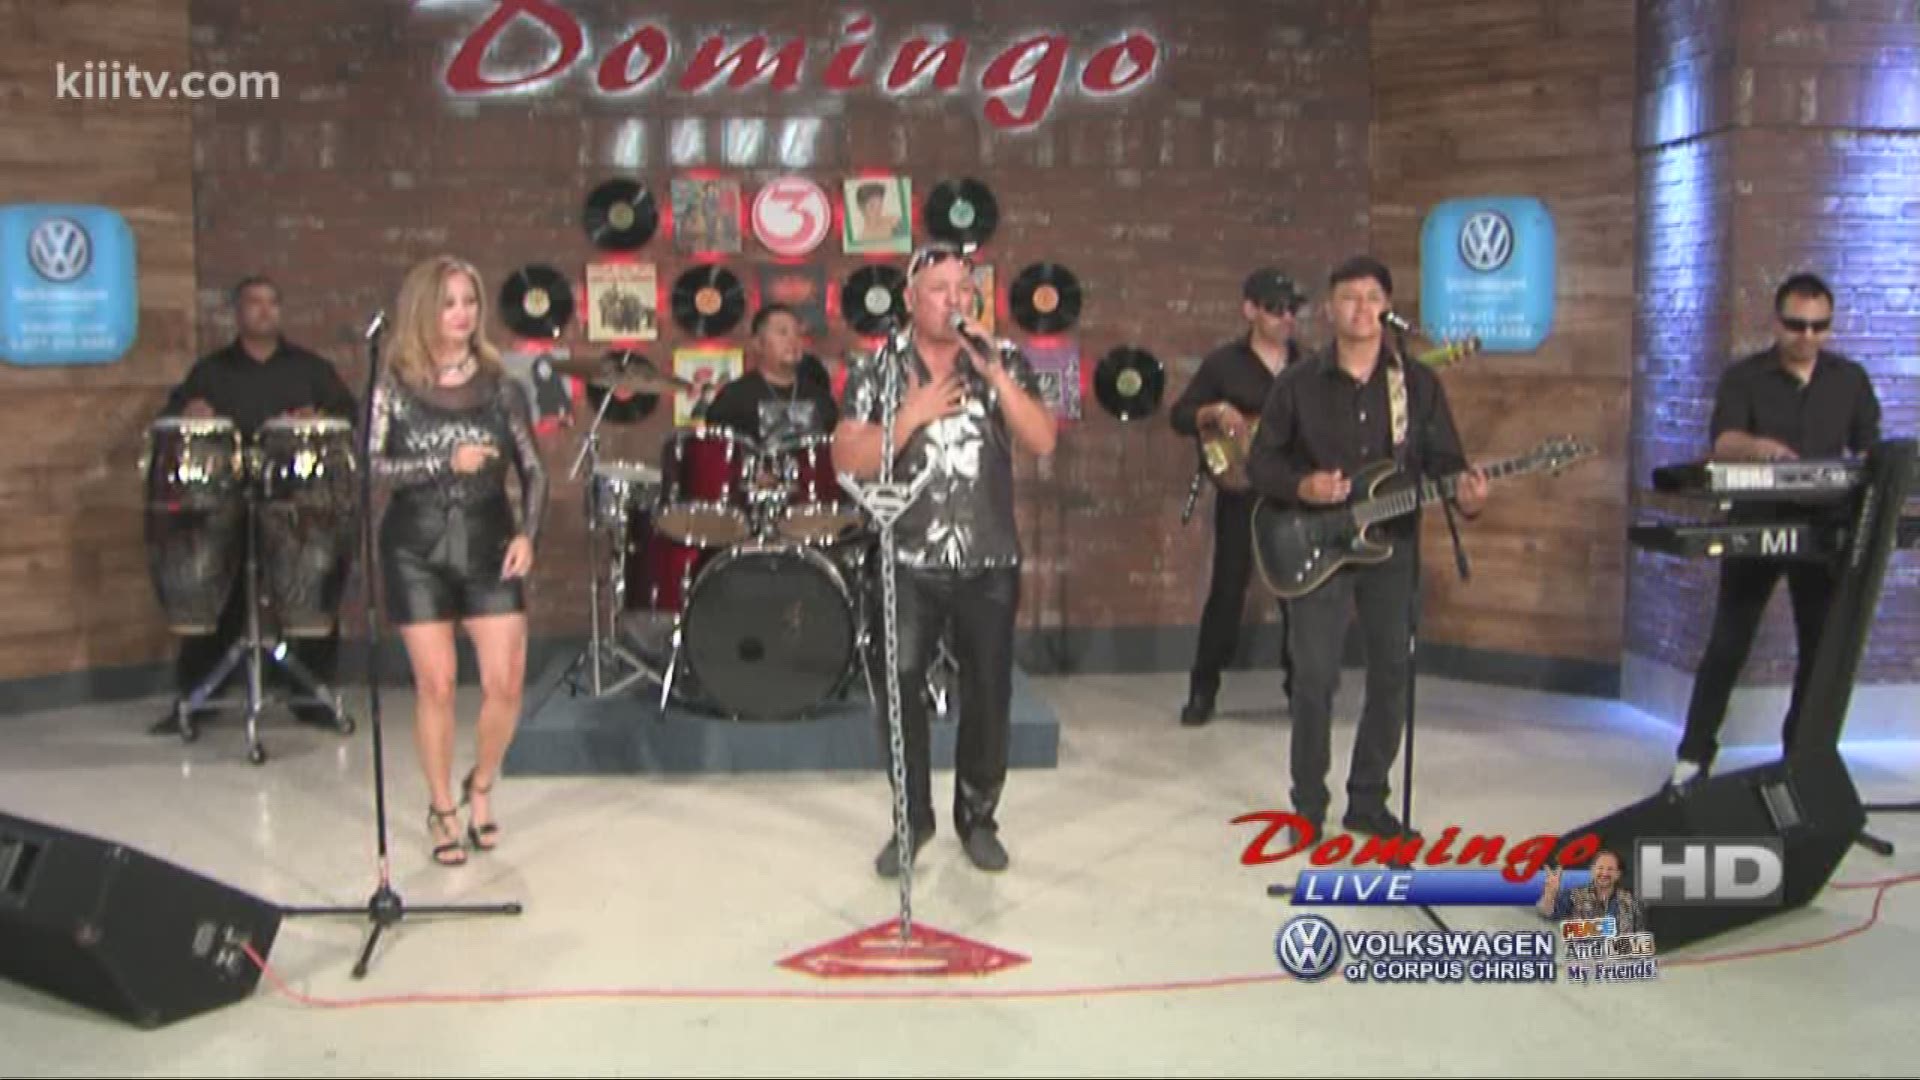 Super Sueno performing "Picky Picky" on Domingo Live.